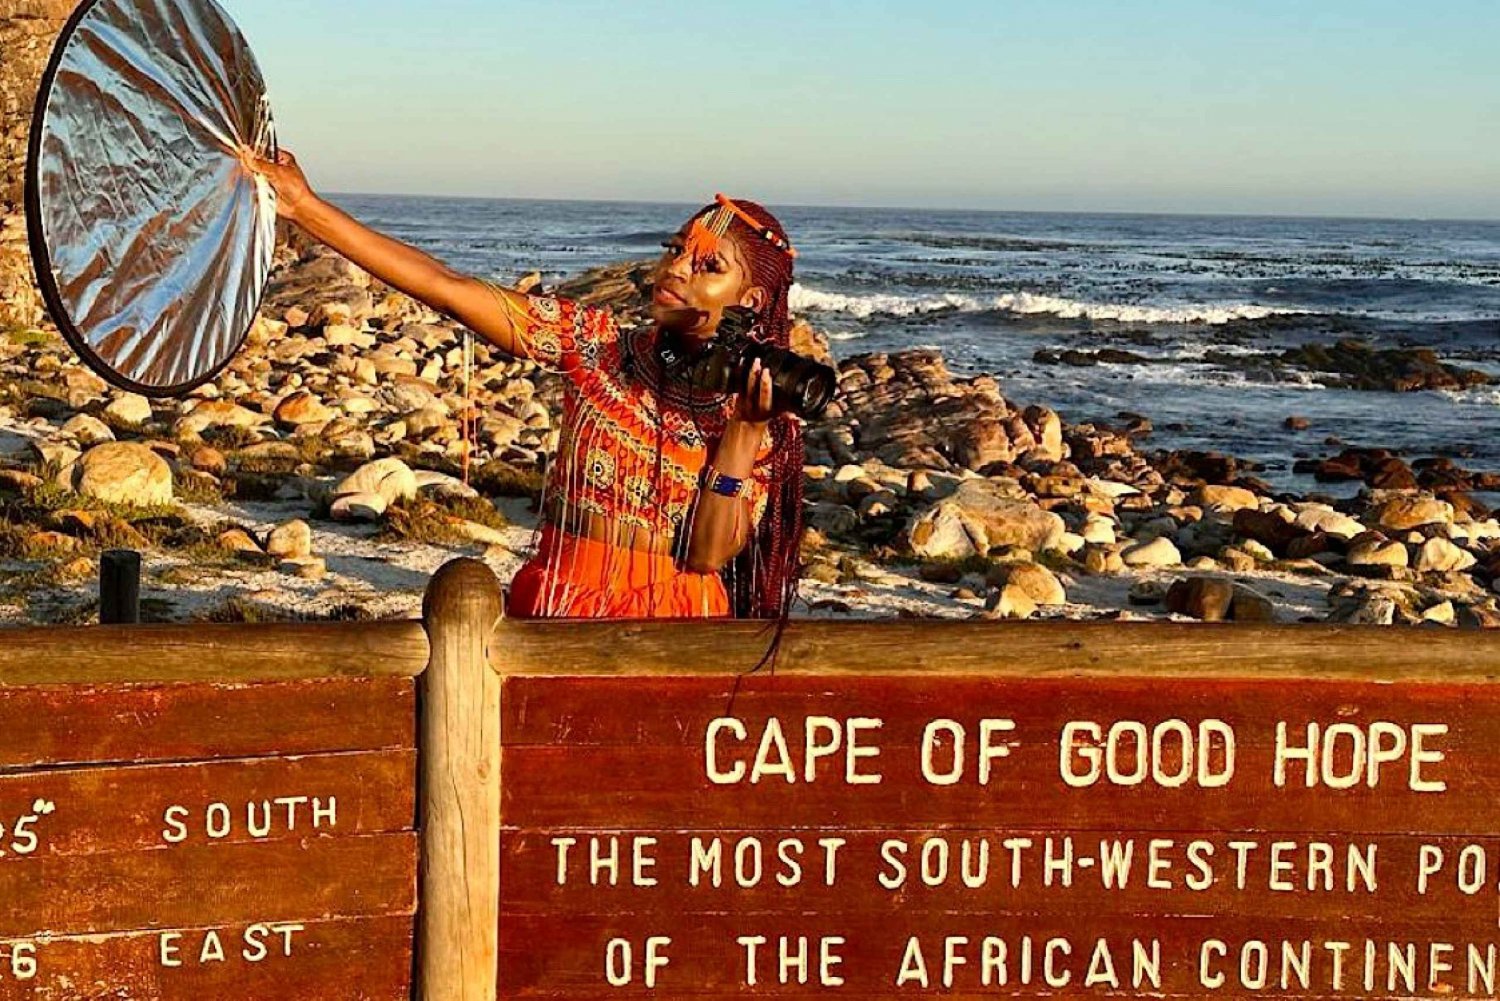 Vanuit Kaapstad: Kaap de Goede Hoop en Pinguïns Tour met gids